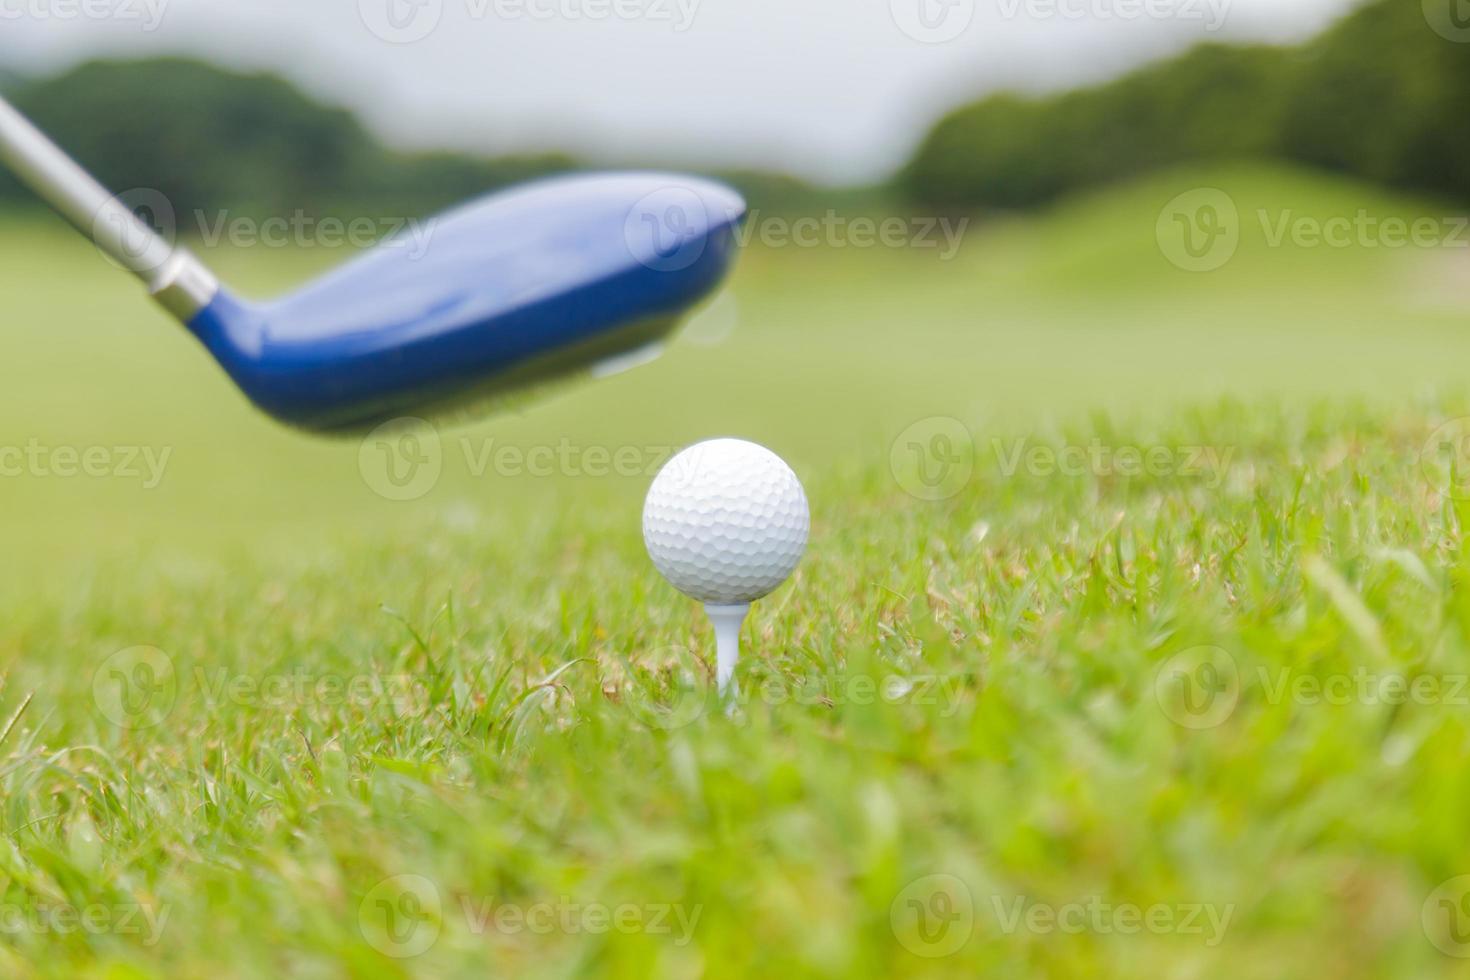 clube de golfe e bola de golfe no campo de golfe foto